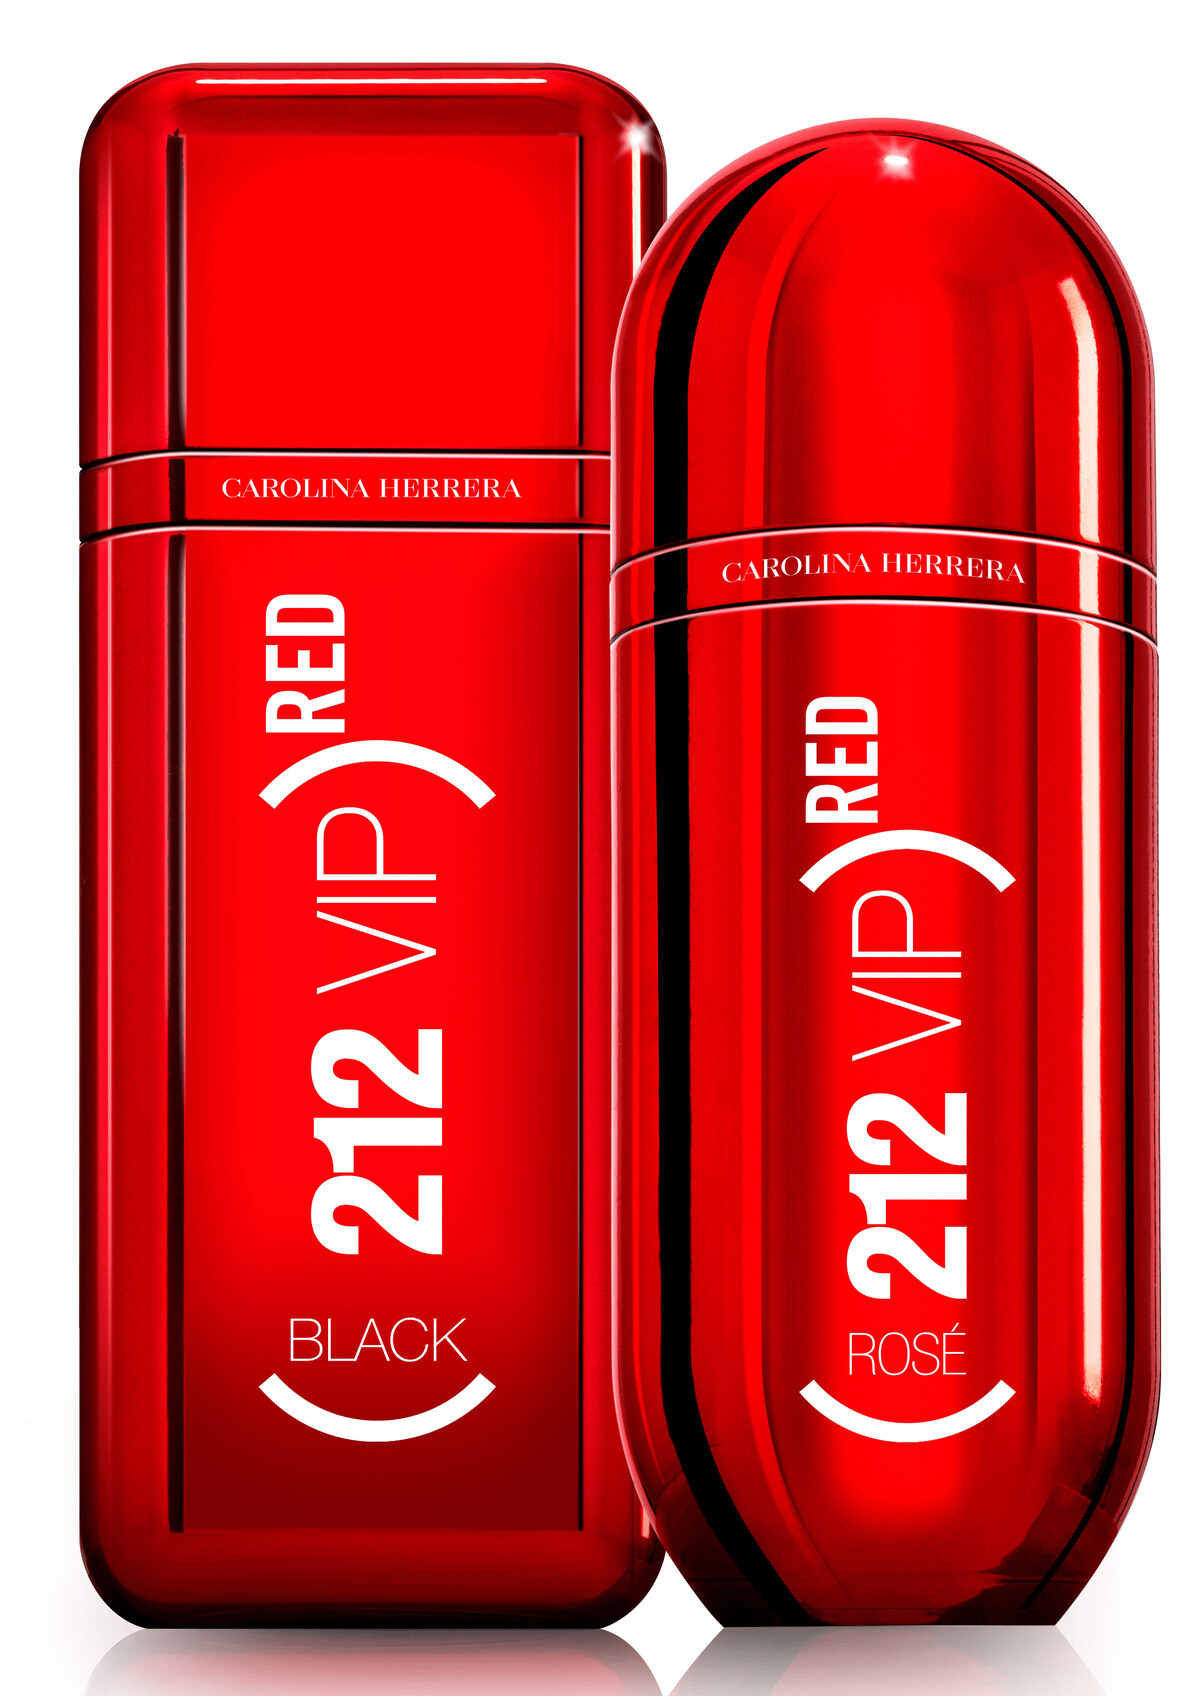 212-vip-ros-red-carolina-herrera-parfum-un-nouveau-parfum-pour-femme